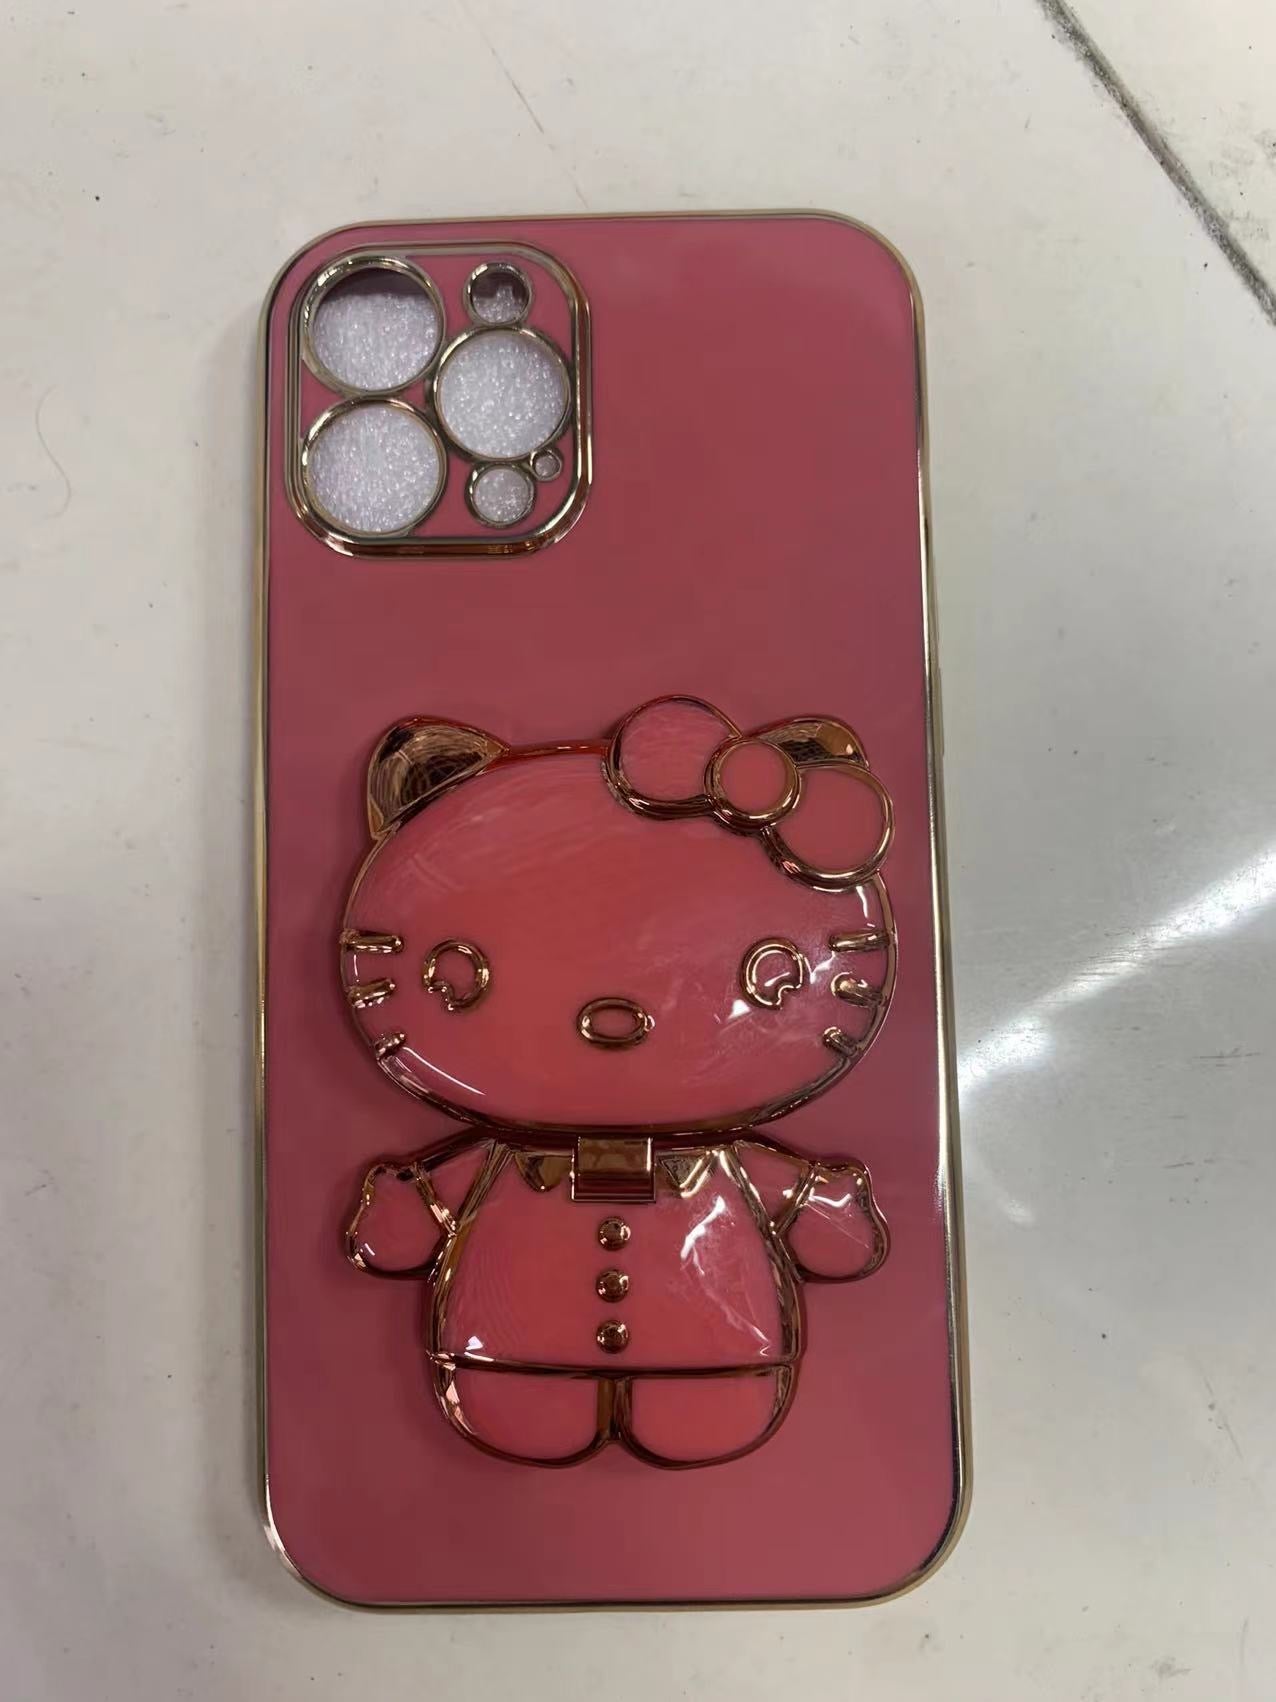 Cute Cartoon Kitty iphone Case